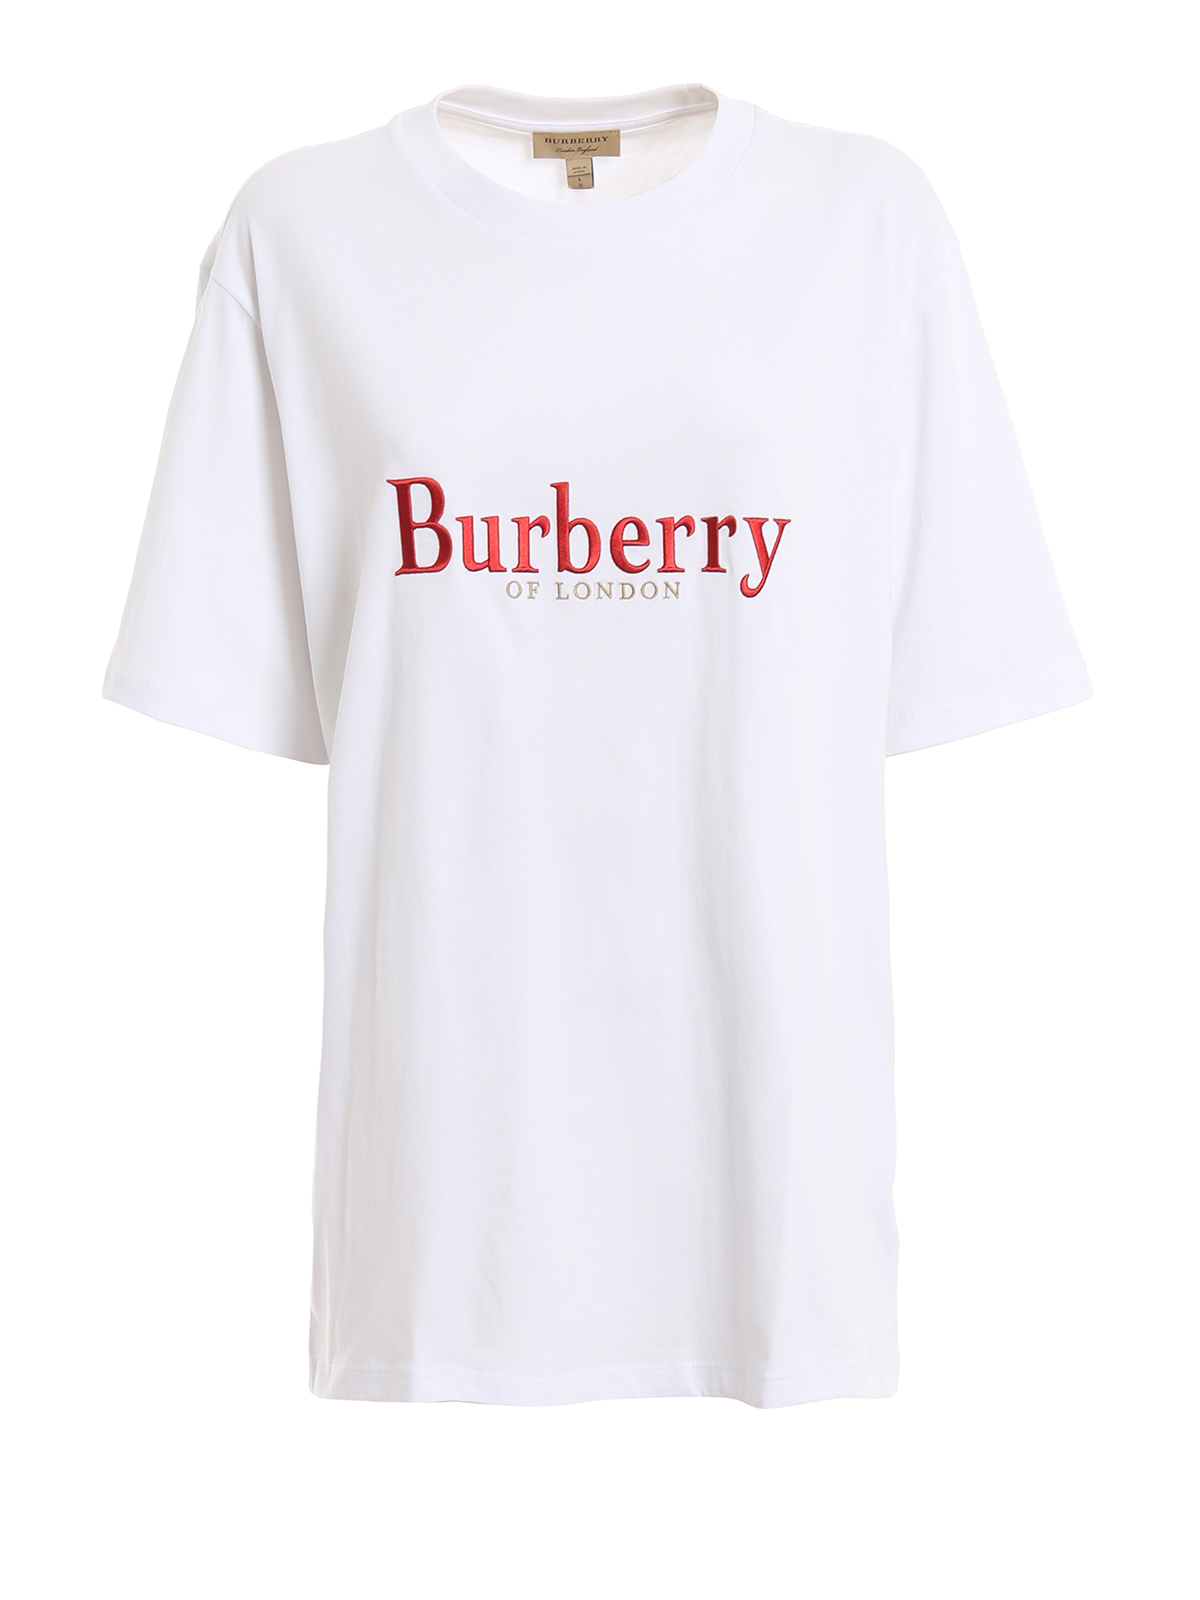 Tシャツ Burberry - Tシャツ - 白 - 8006788 | iKRIX shop online